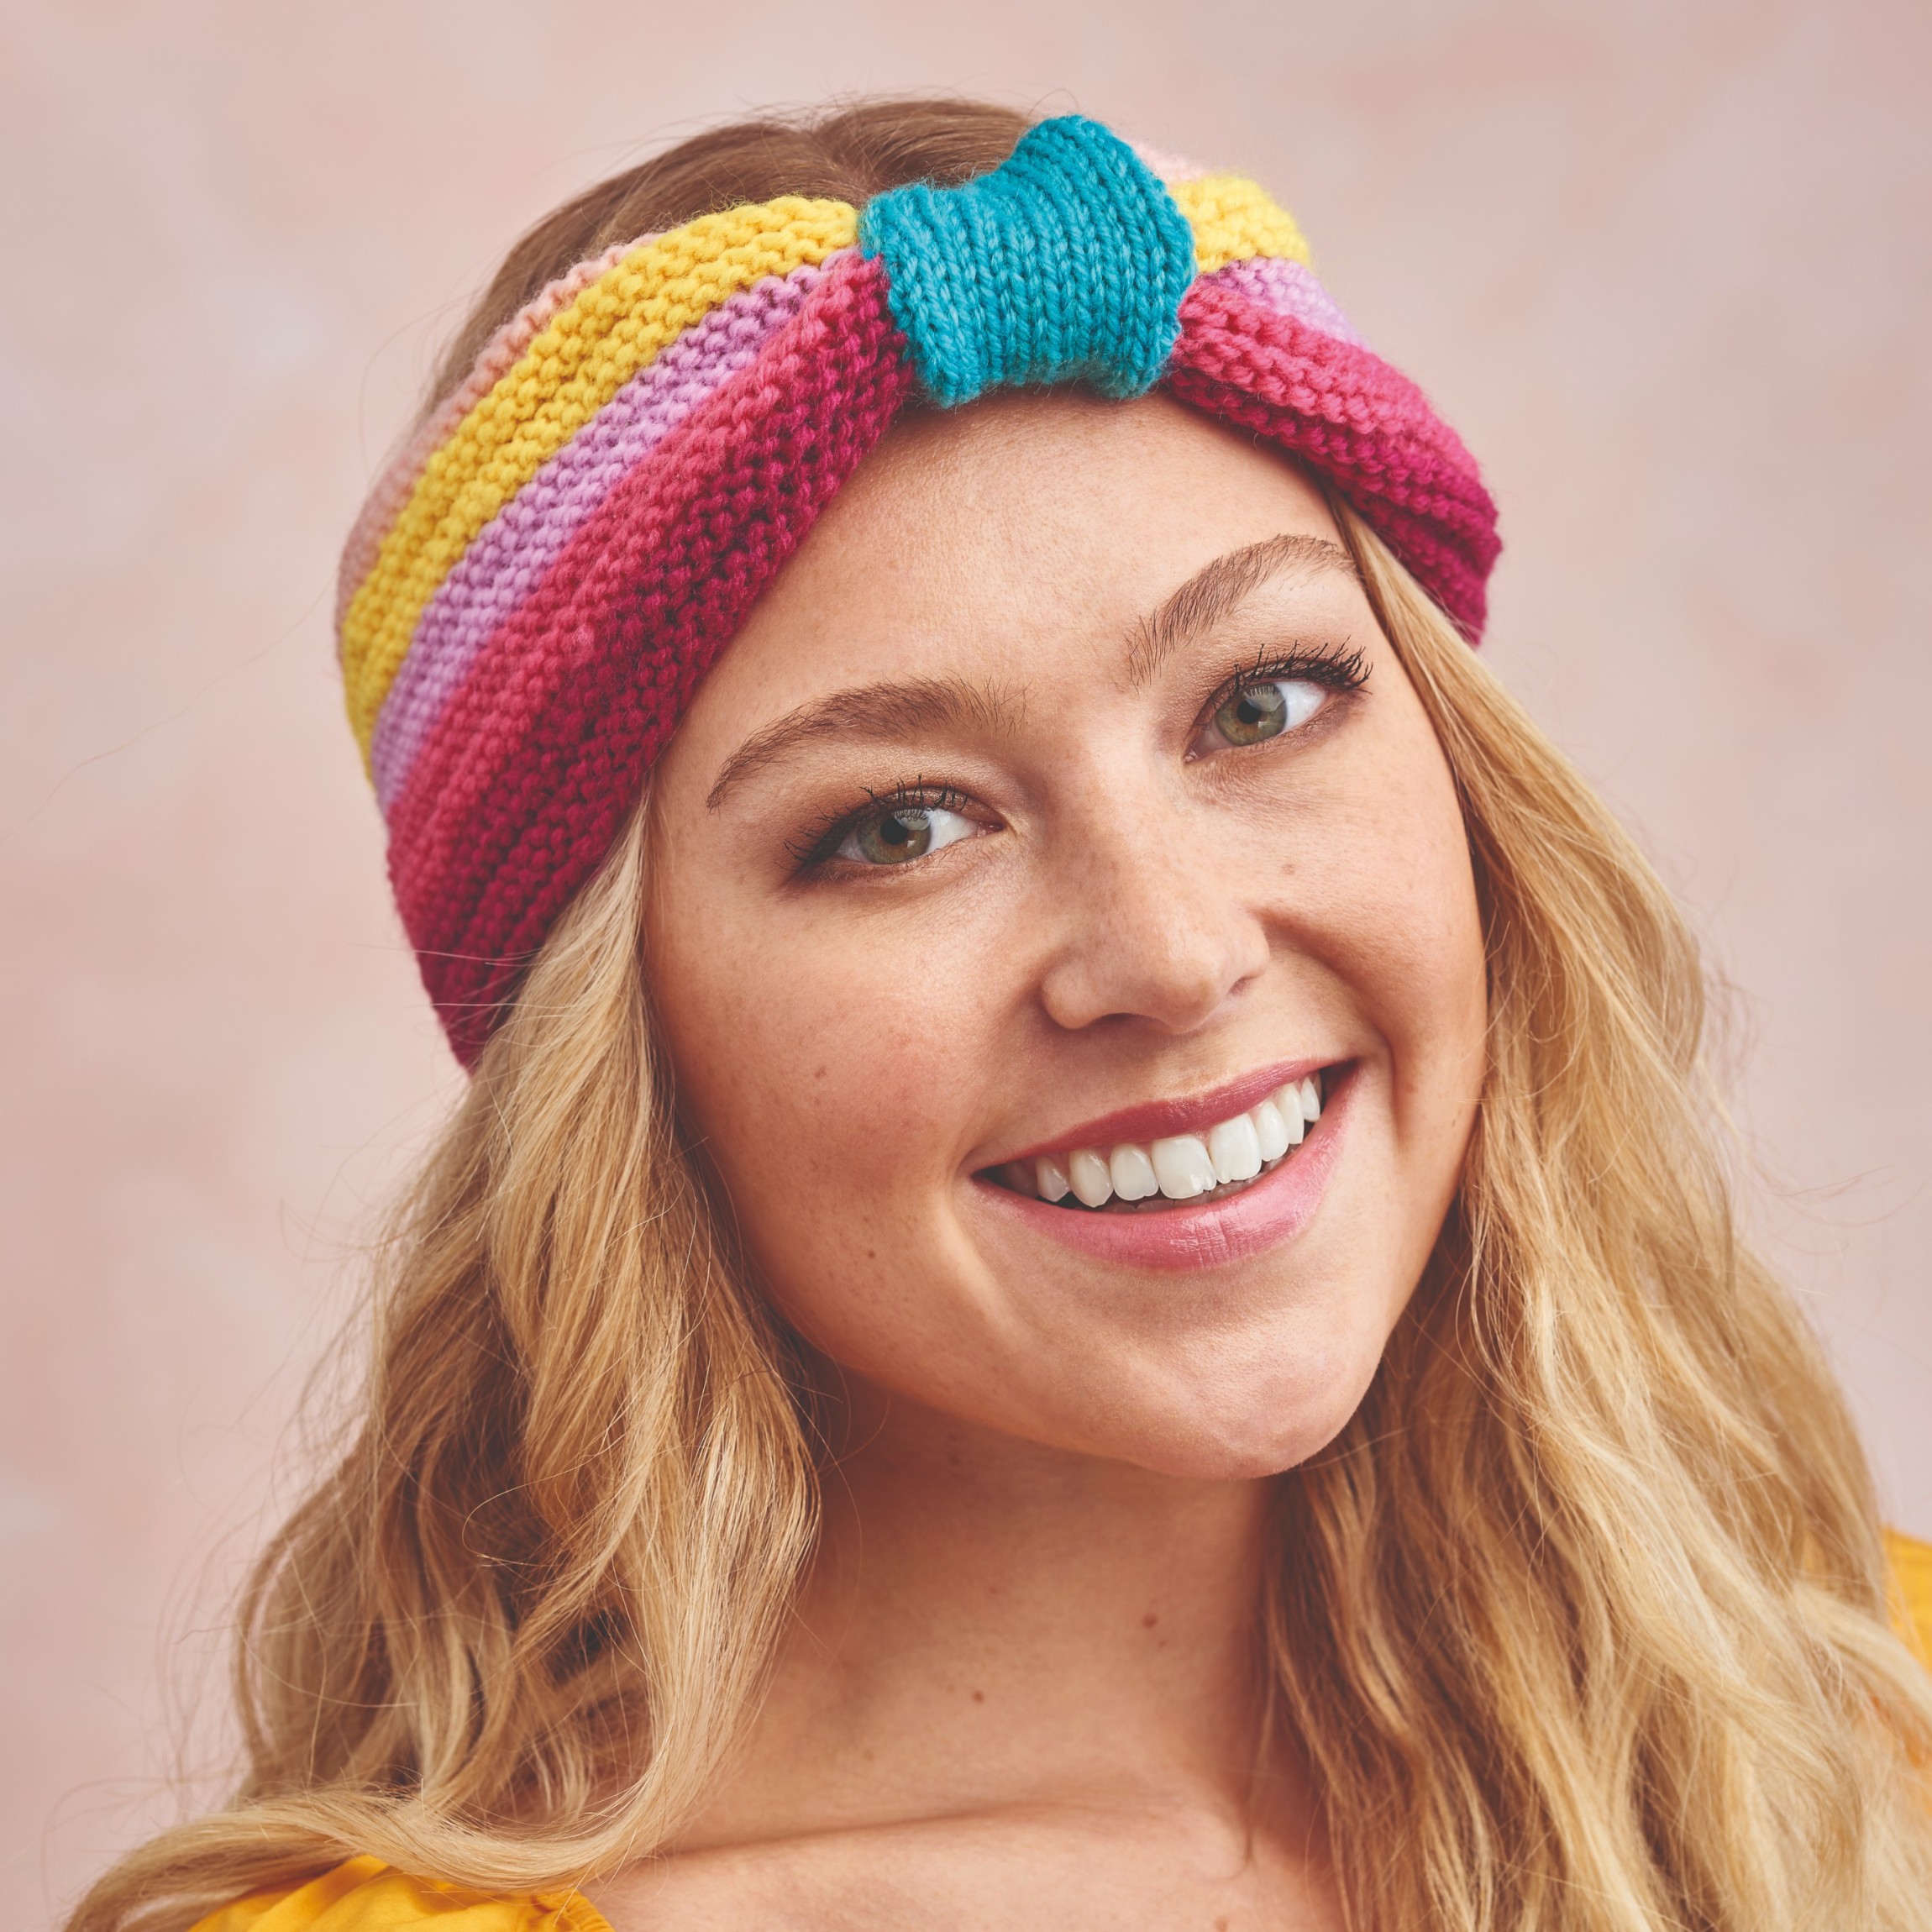 Knitted Headband Patterns, Blog